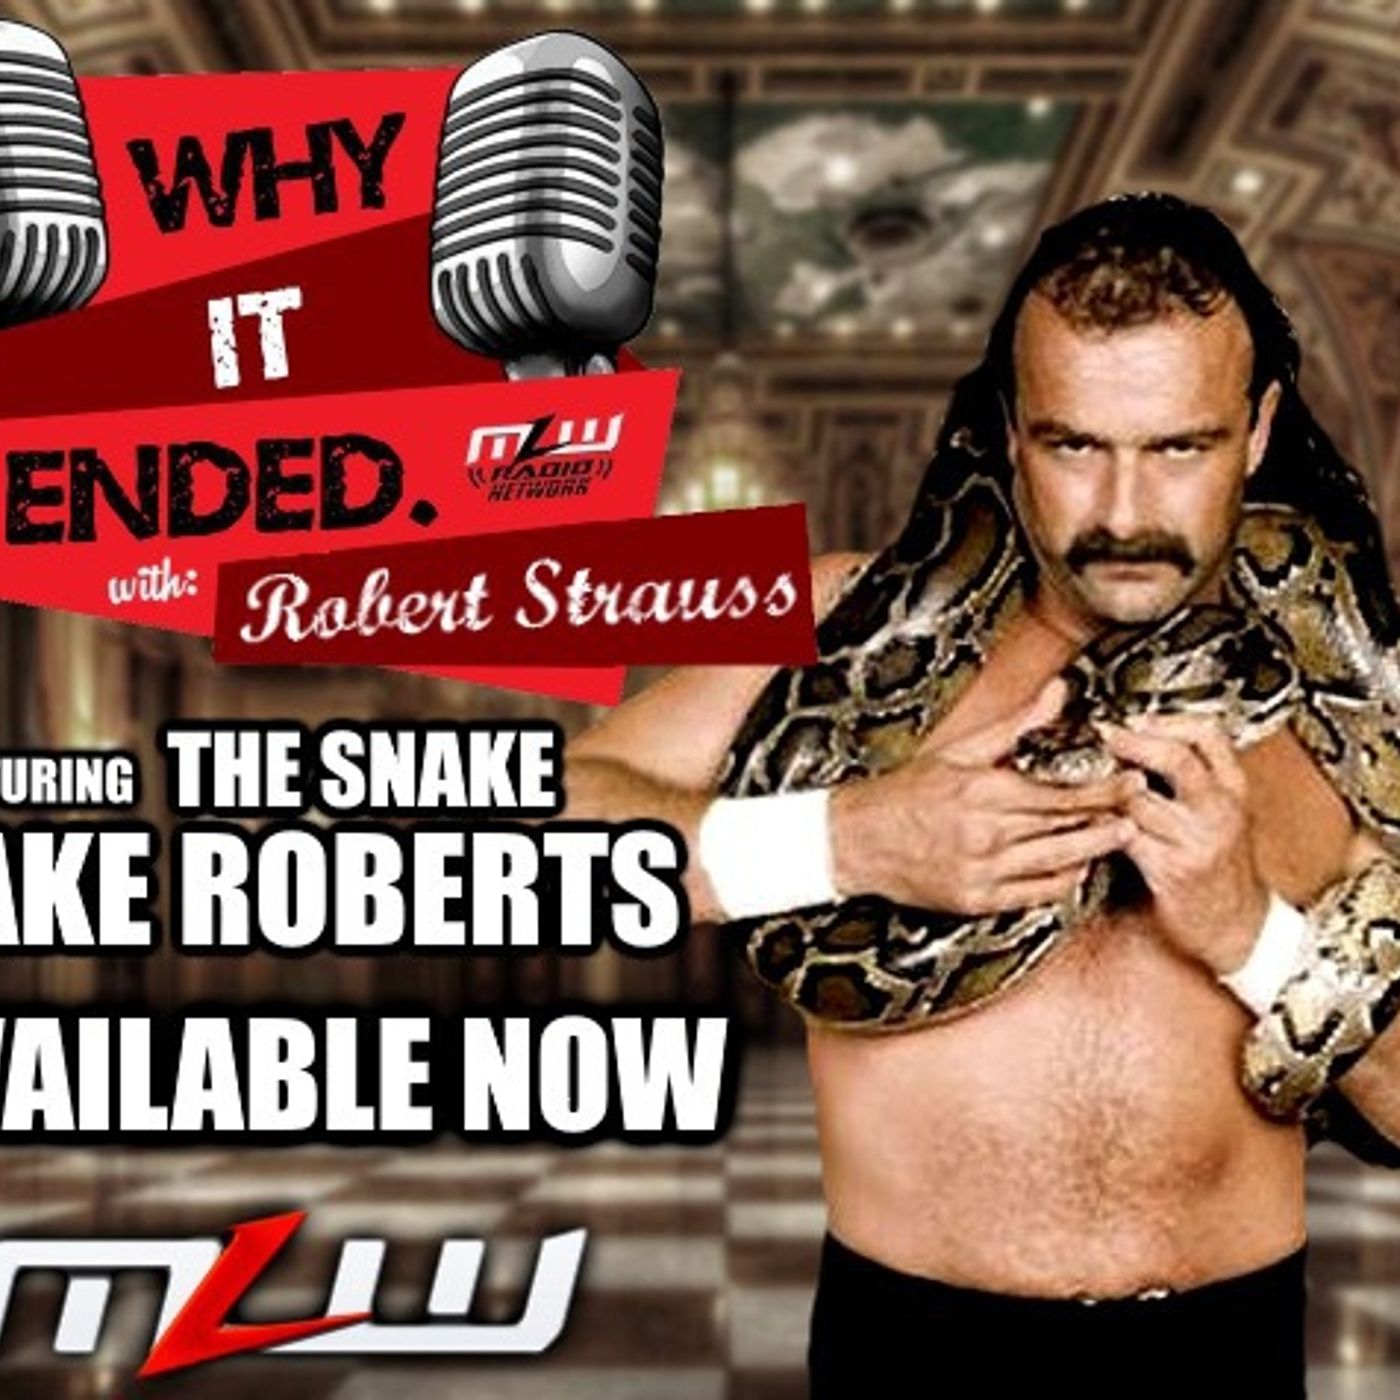 Jake The Snake Roberts!!